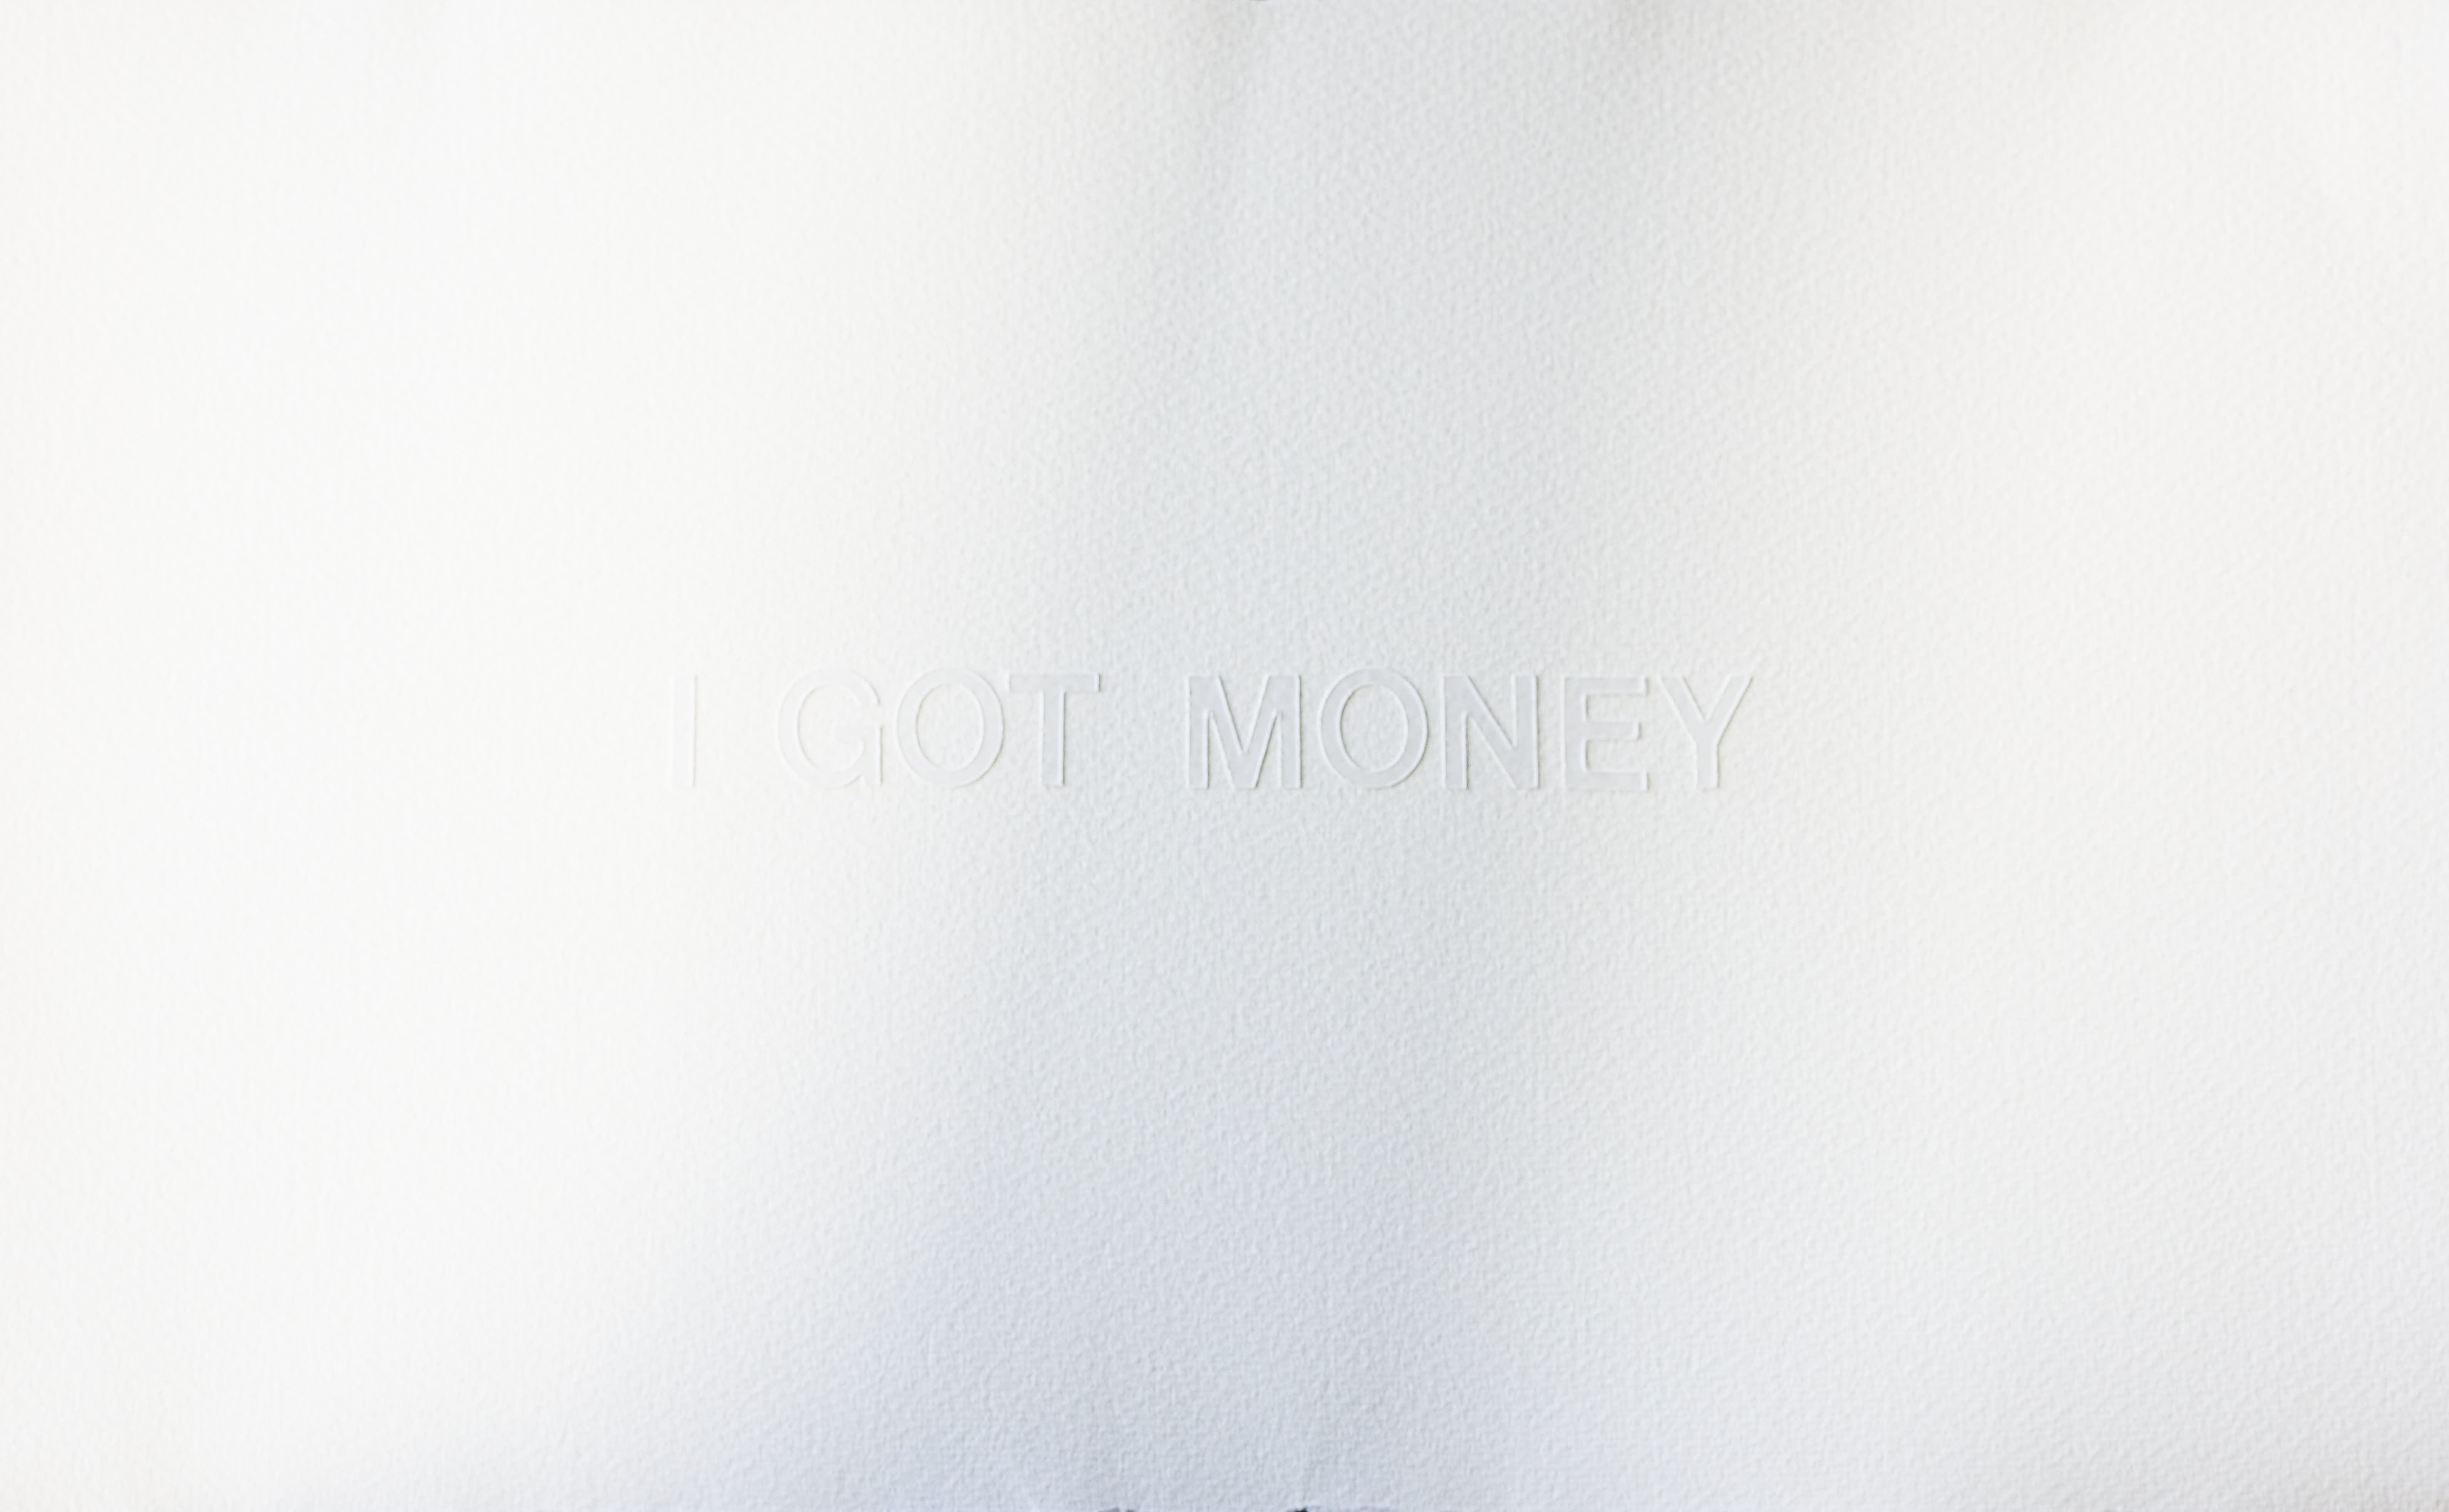 I Got Money, 2020.  Acrylic lettering on Paper, 34 x 56 cm.